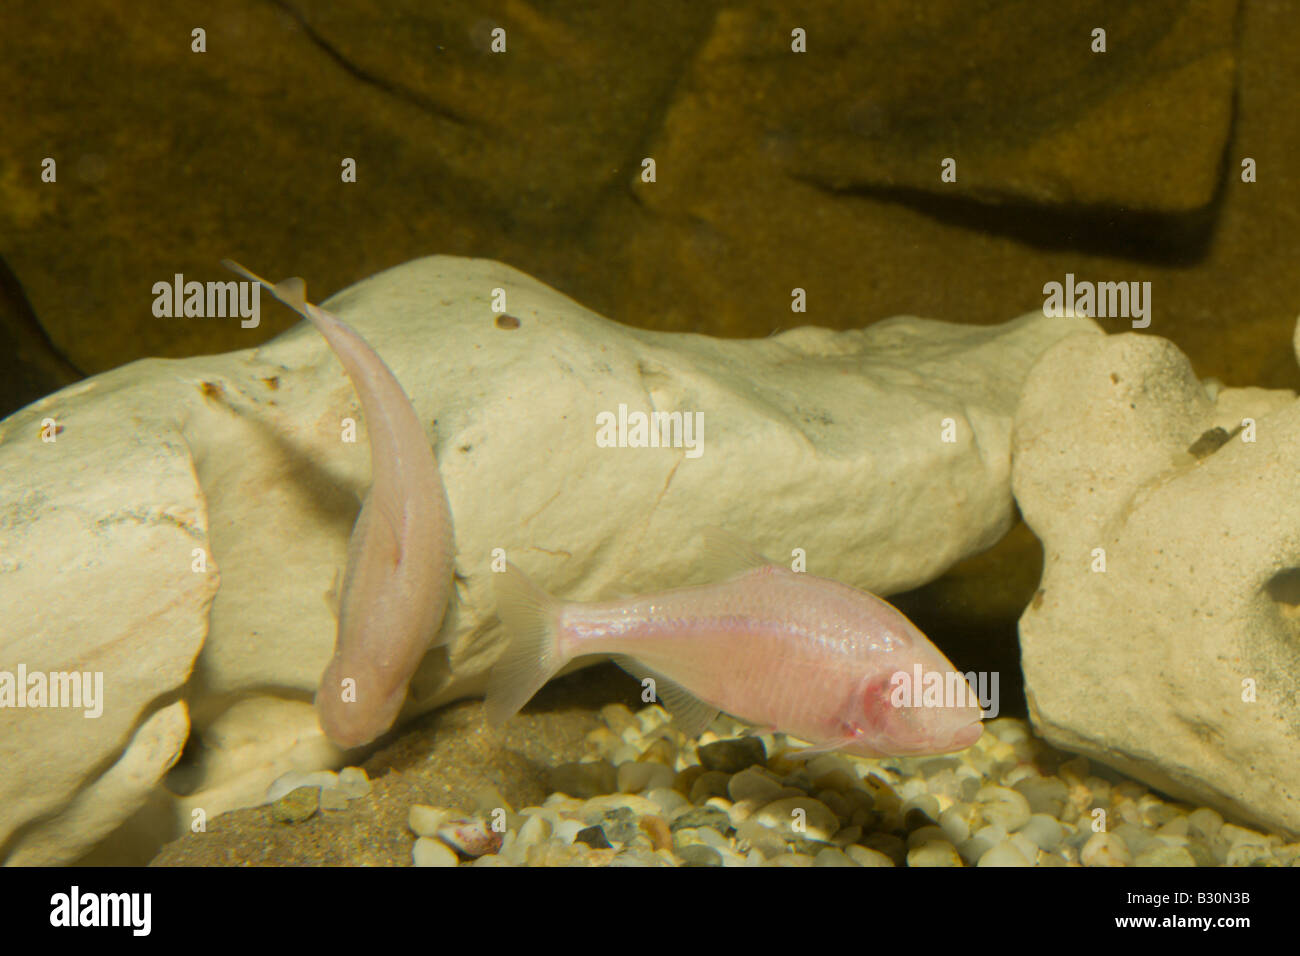 Blind cavefish Anoptichthys jordani Astyanax fasciatus mexicanus Mexico Underwater cave Stock Photo